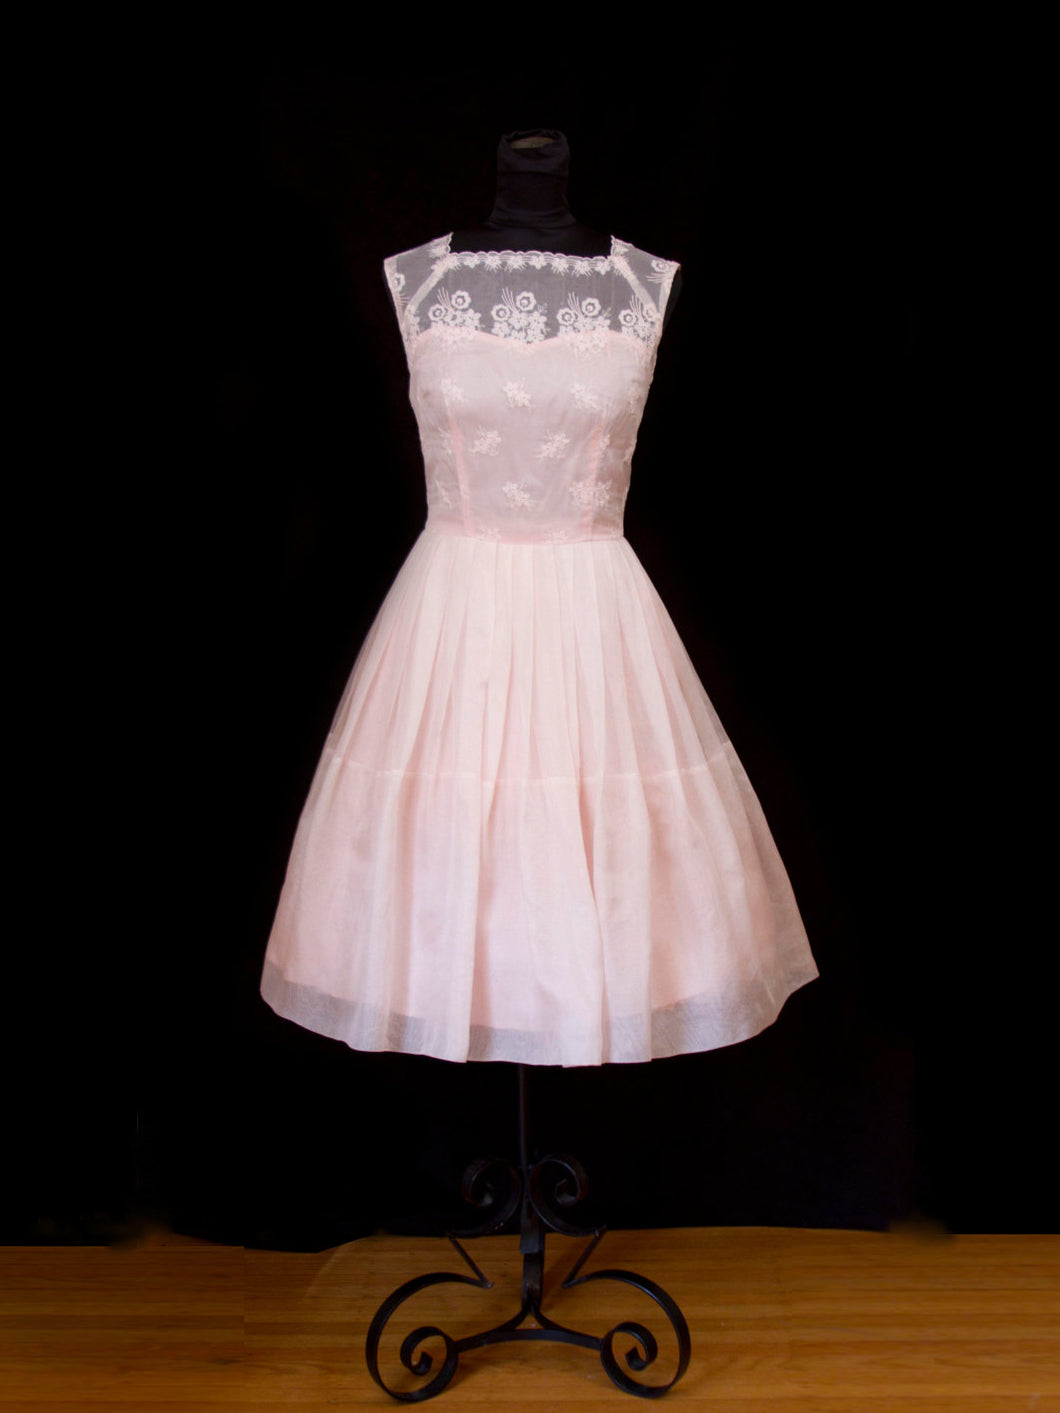 2017 Homecoming Dress Beautiful Square Pearl Pink Short Prom Dress Party Dress JK265